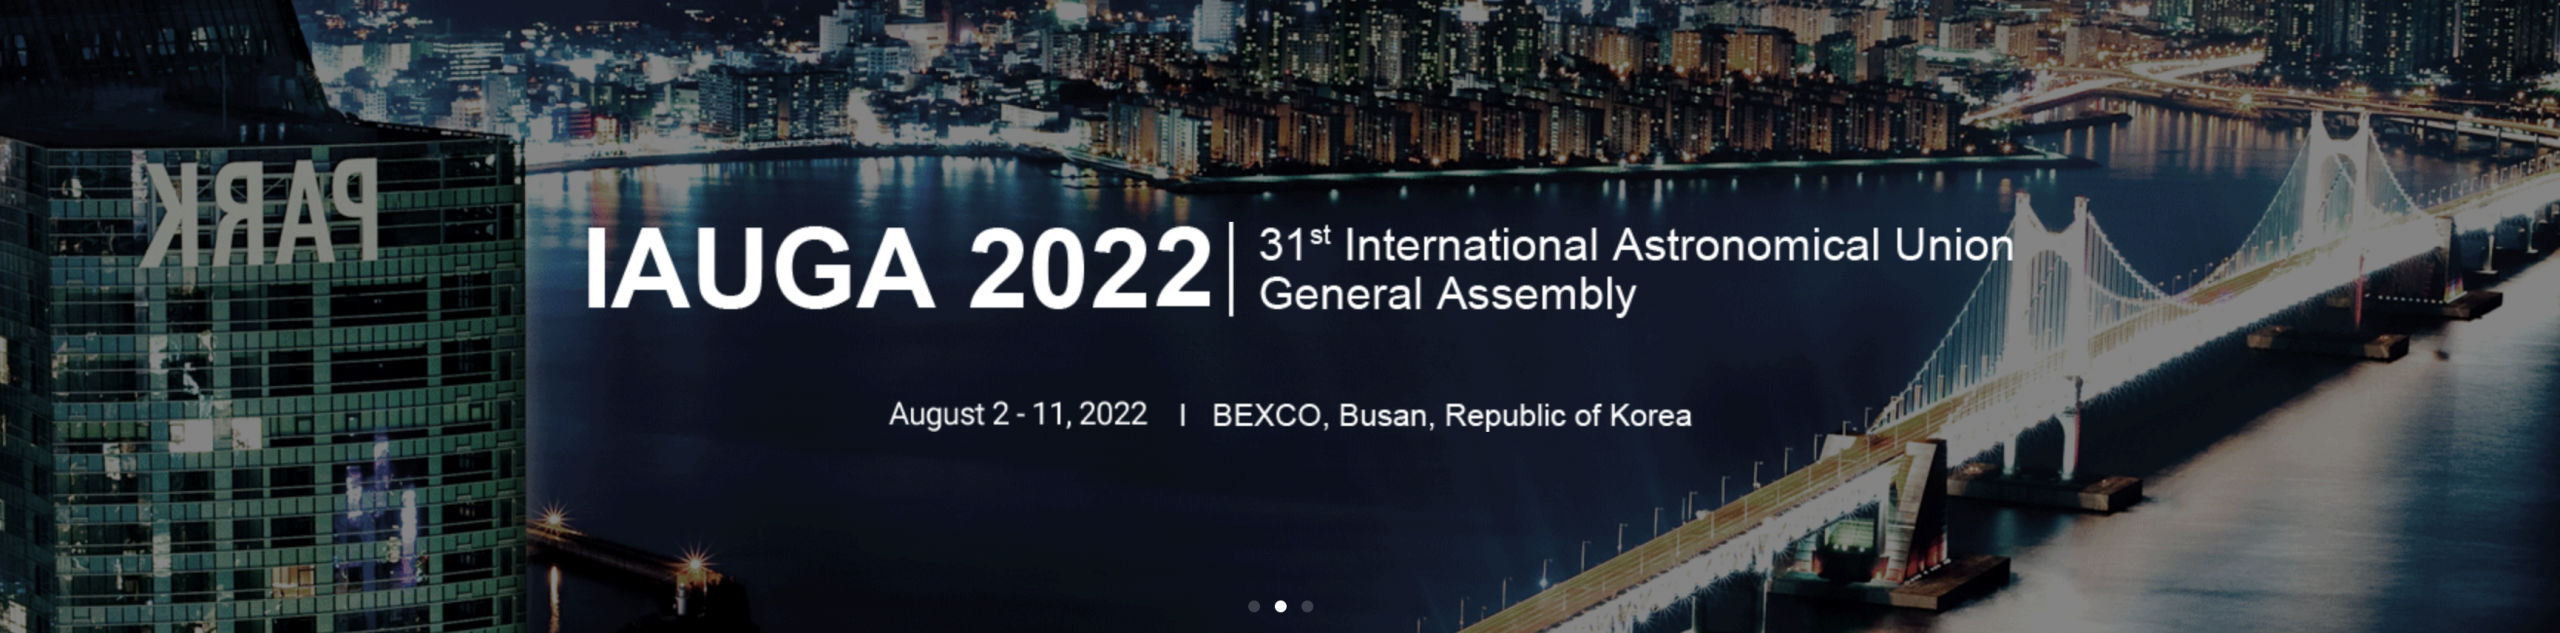 IAGUGA 2022 August 2-11, 2022 BEXCO, Busan, Republic of Korea